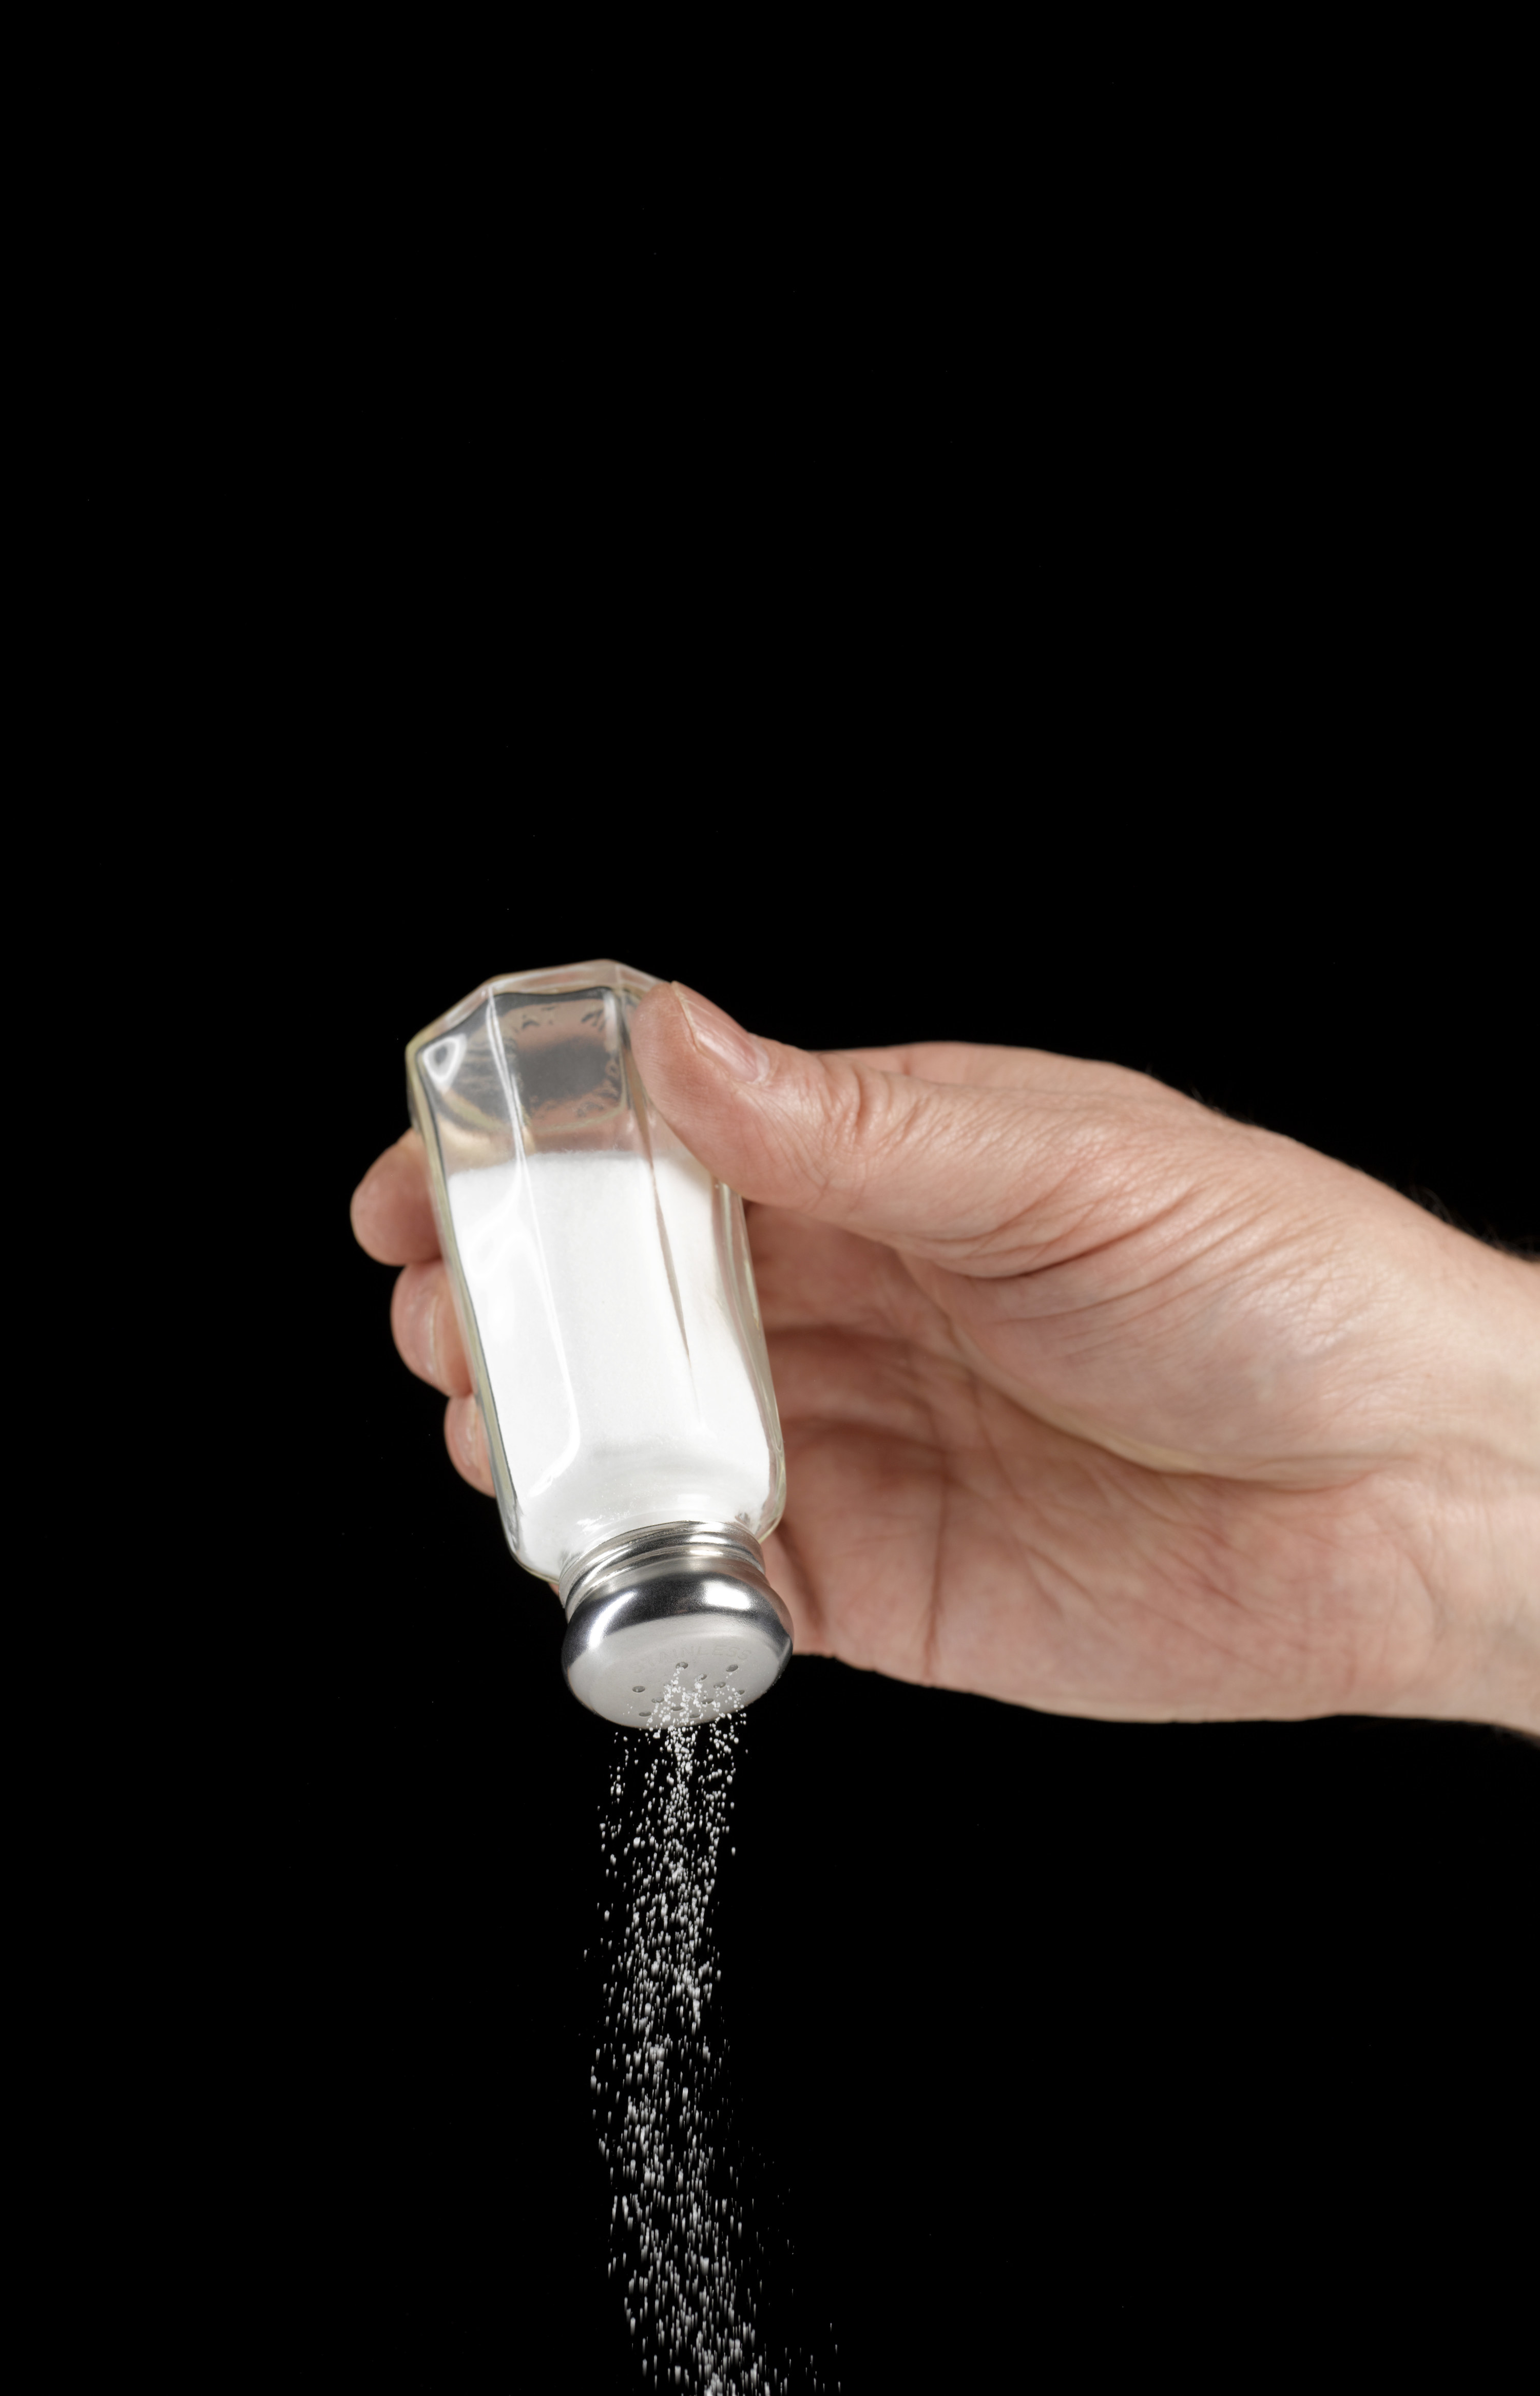 Hand holding a salt shaker upside, forcing salt to be shaken out. Photo is set against a dark black background.